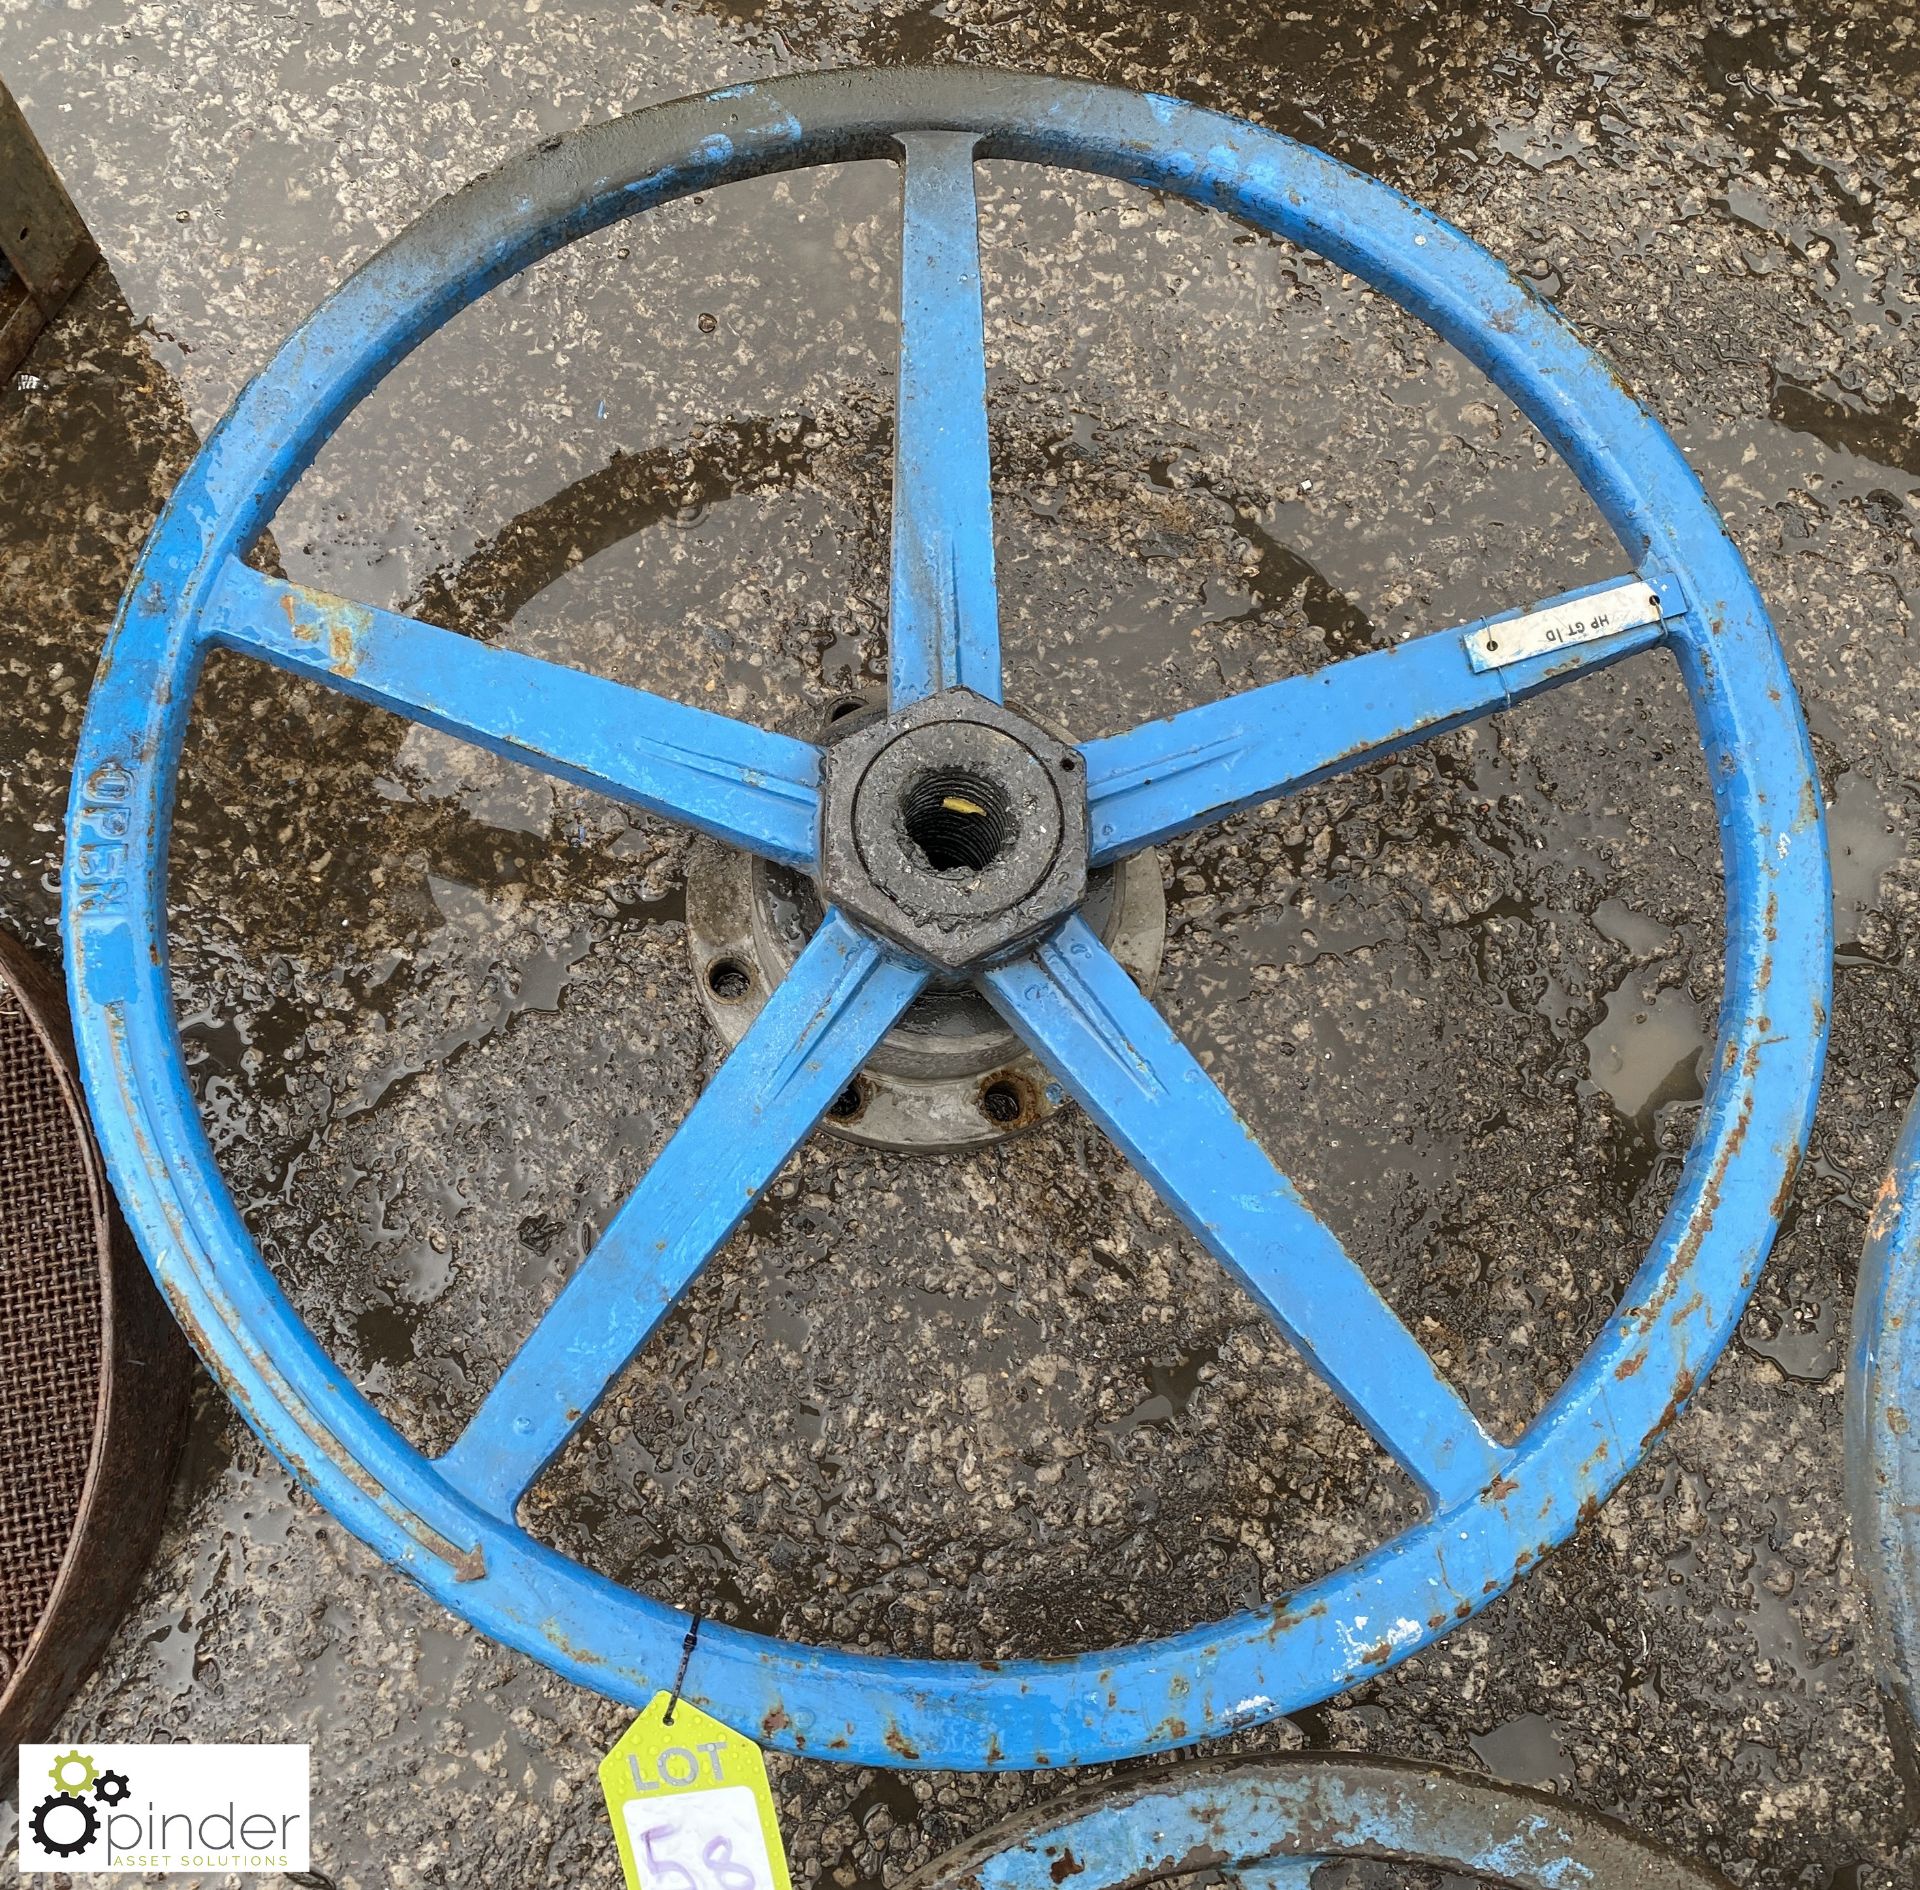 Cast iron Valve Wheel, 760mm dia